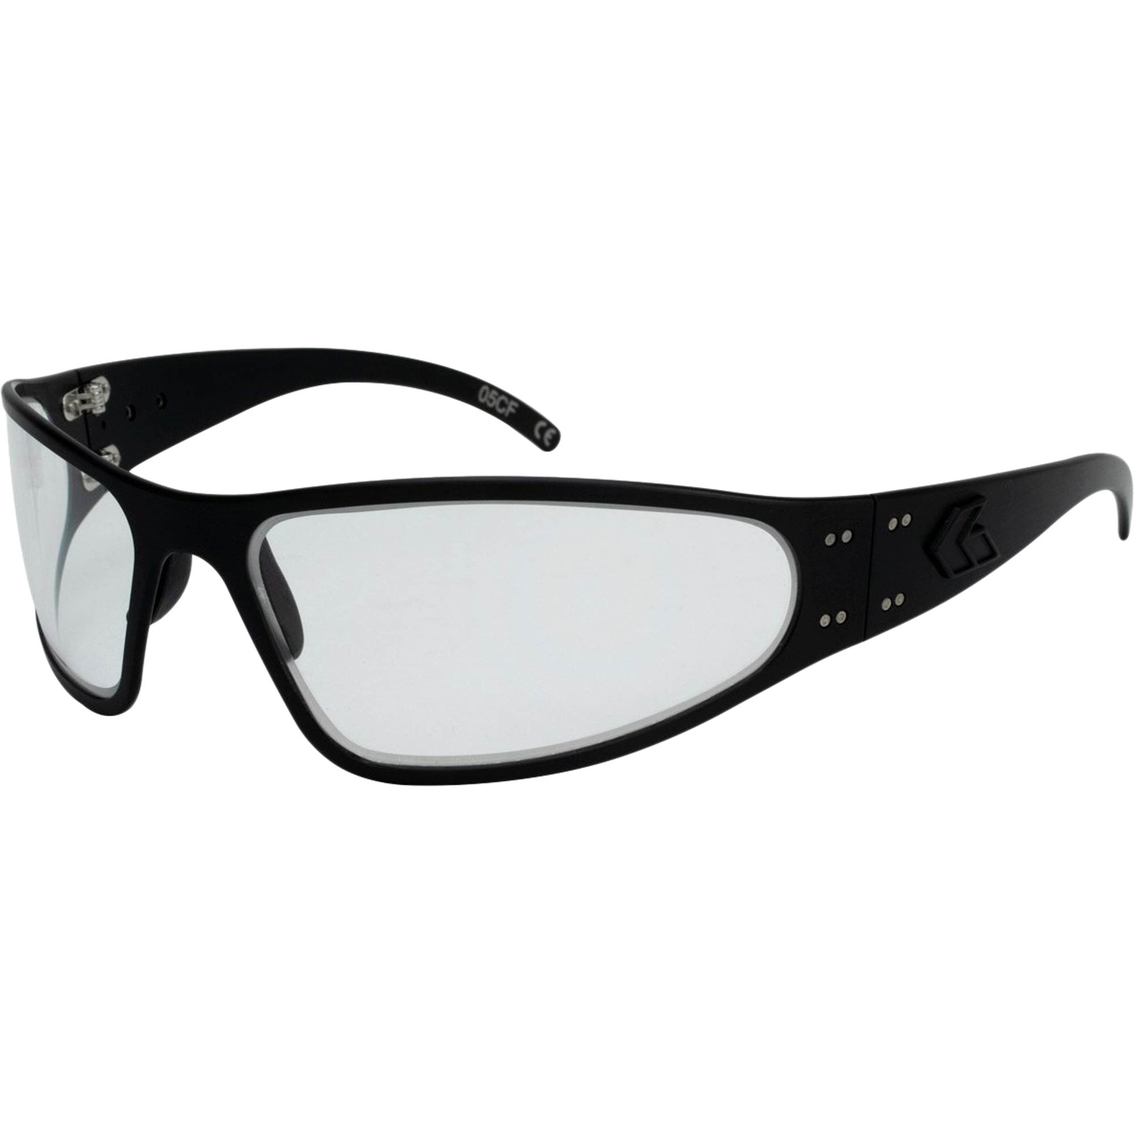 Gatorz Blackout Wraptor Inferno Photochromic Sunglasses Wrambp07, Sunglasses, Clothing & Accessories